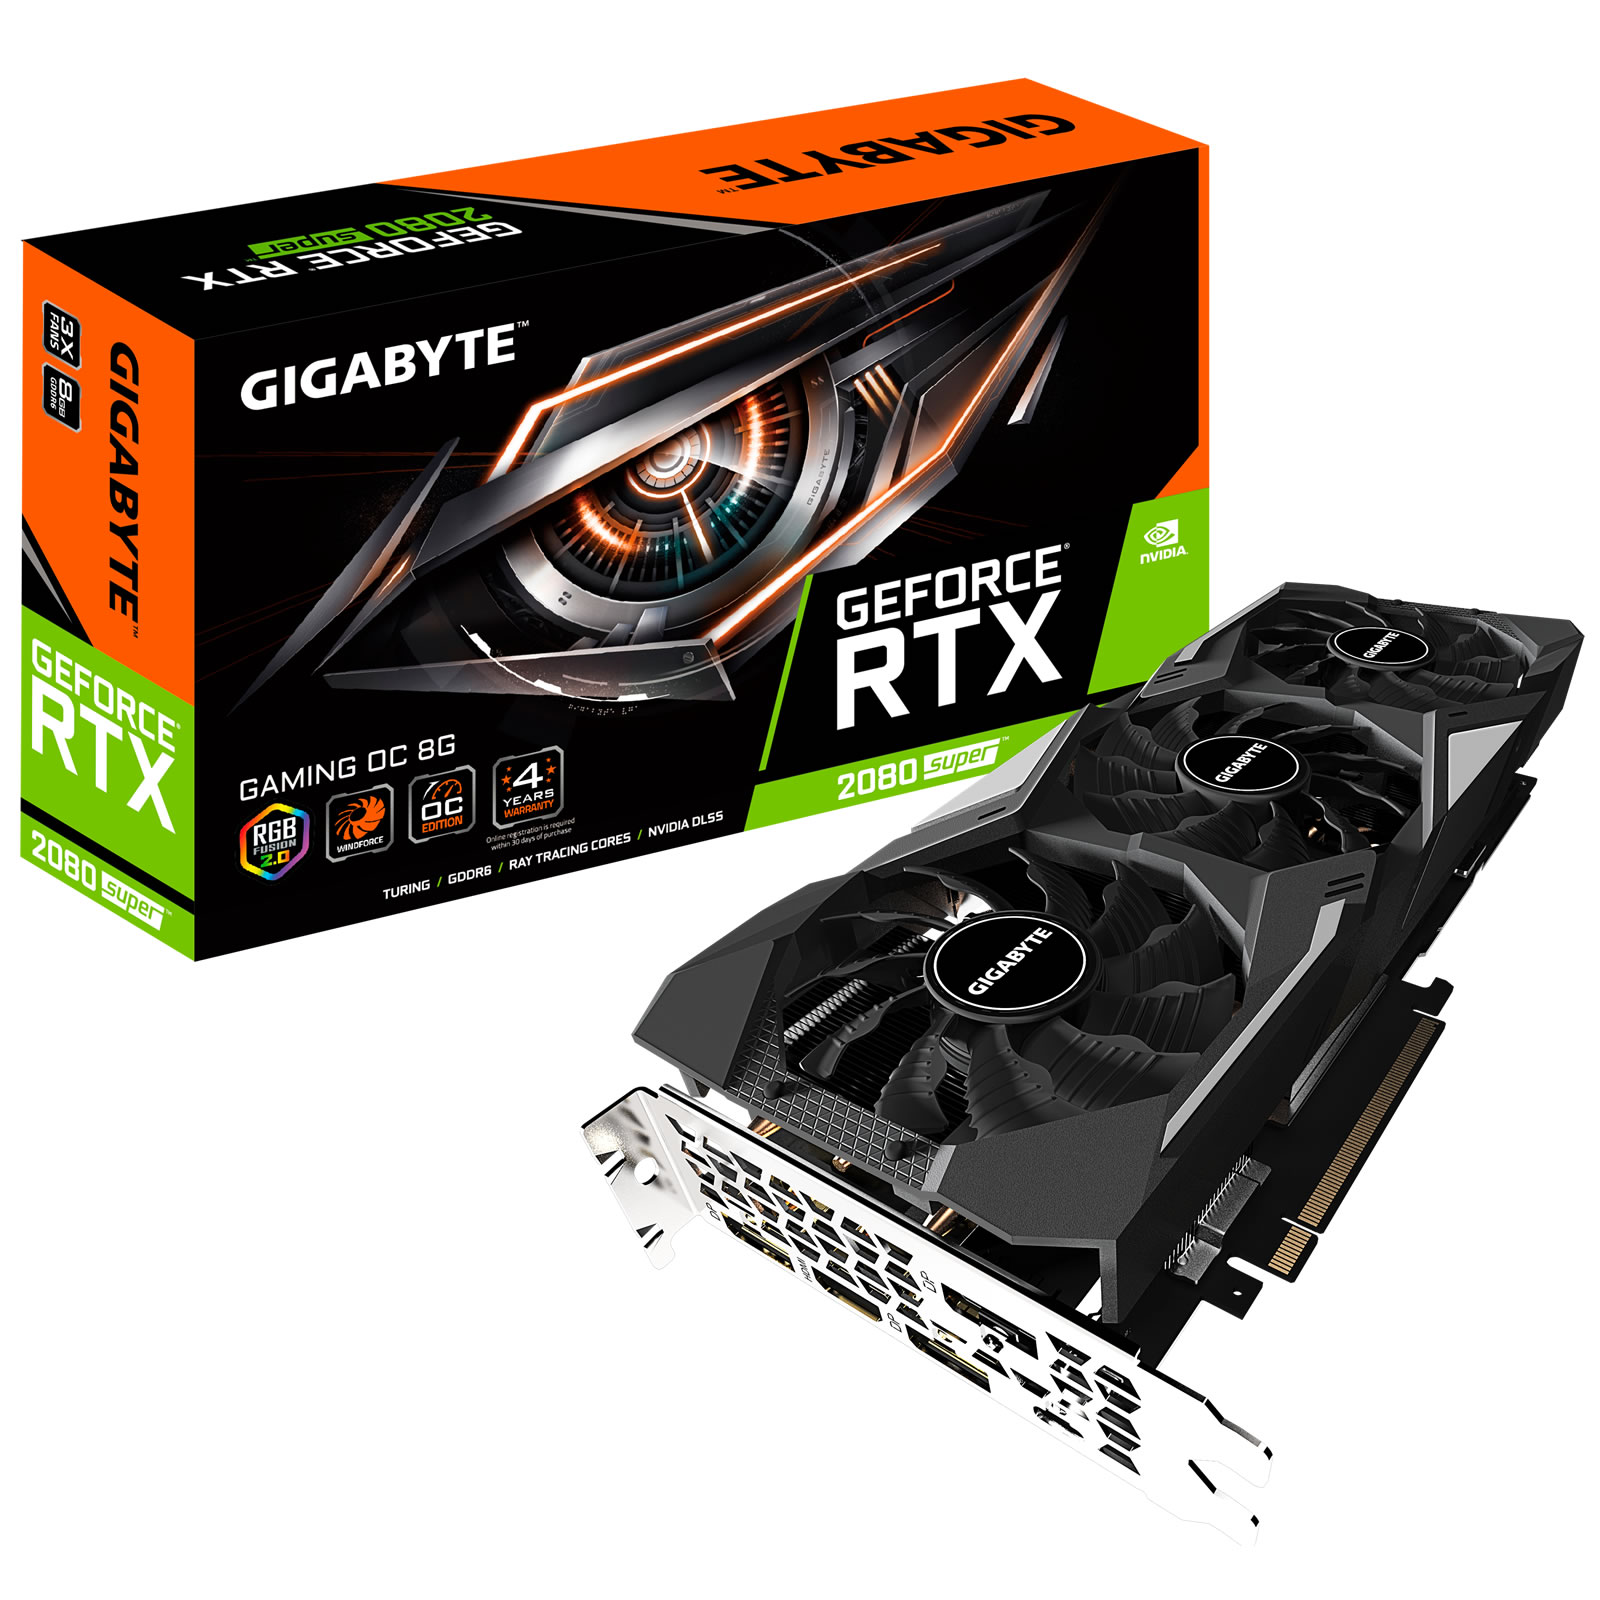 Gigabyte - Gigabyte GeForce RTX 2080 SUPER Gaming OC 8192MB GDDR6 PCI-Express Graphics